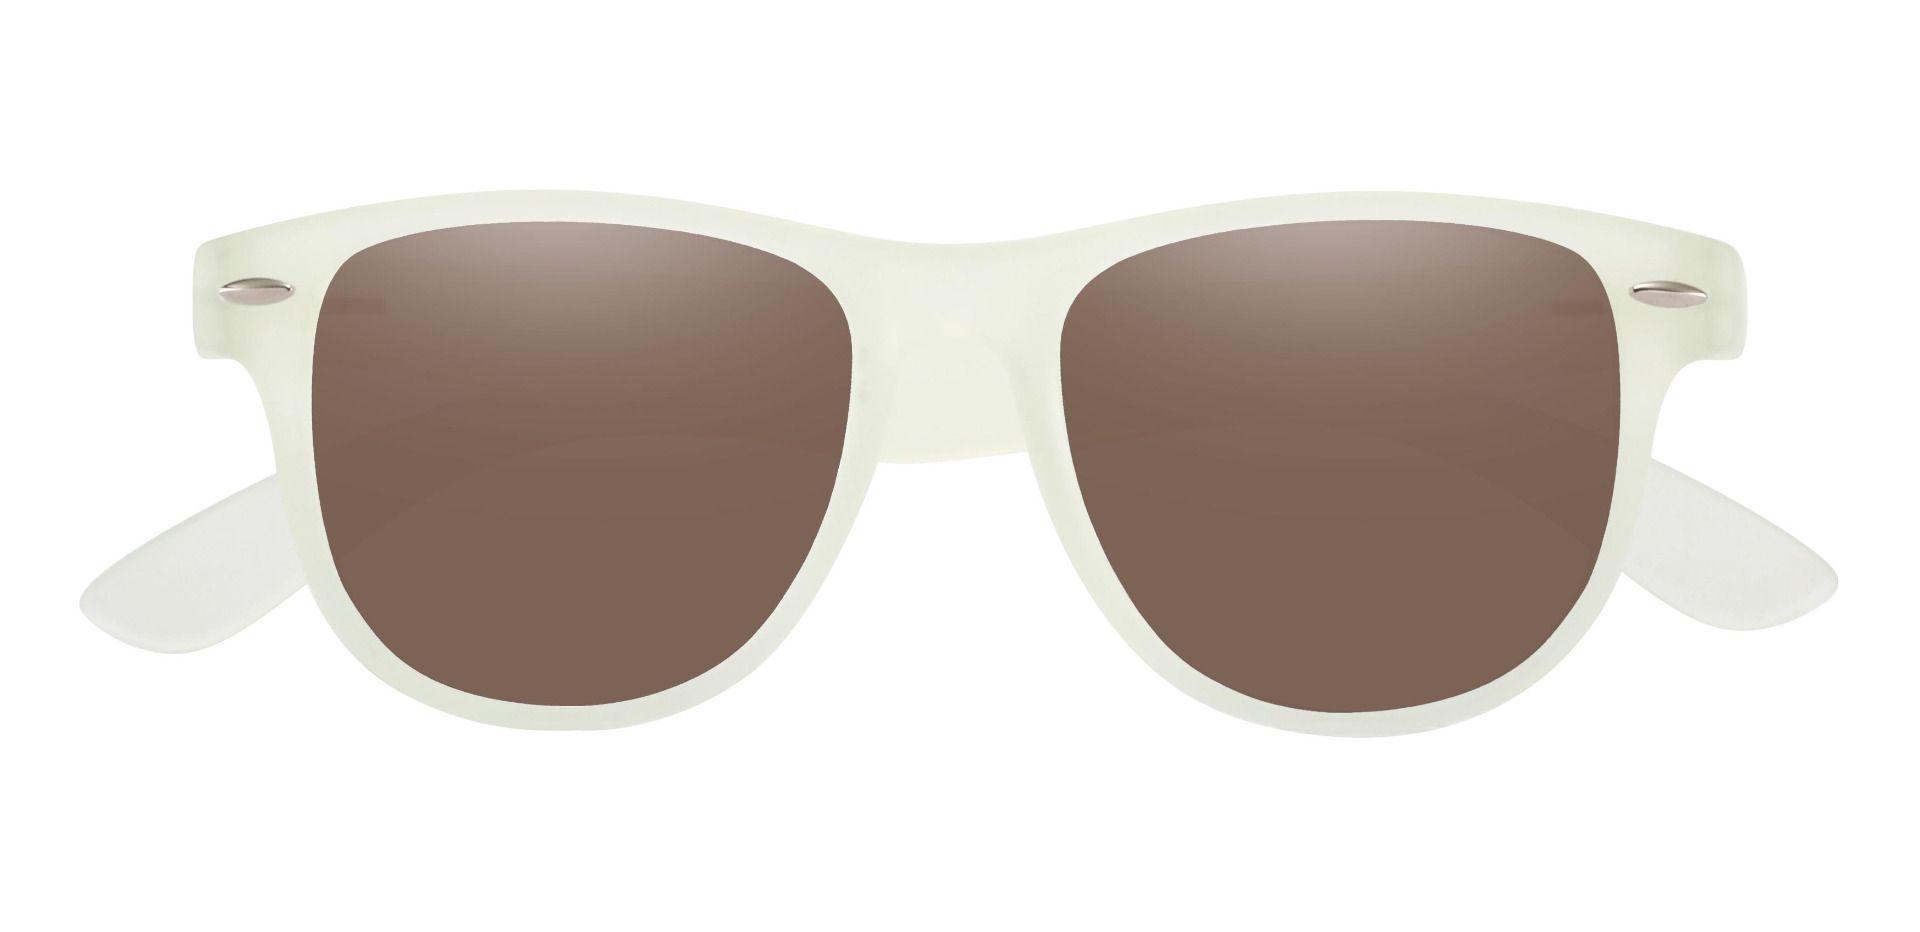 Nash Square Prescription Sunglasses - Clear Frame With Brown Lenses